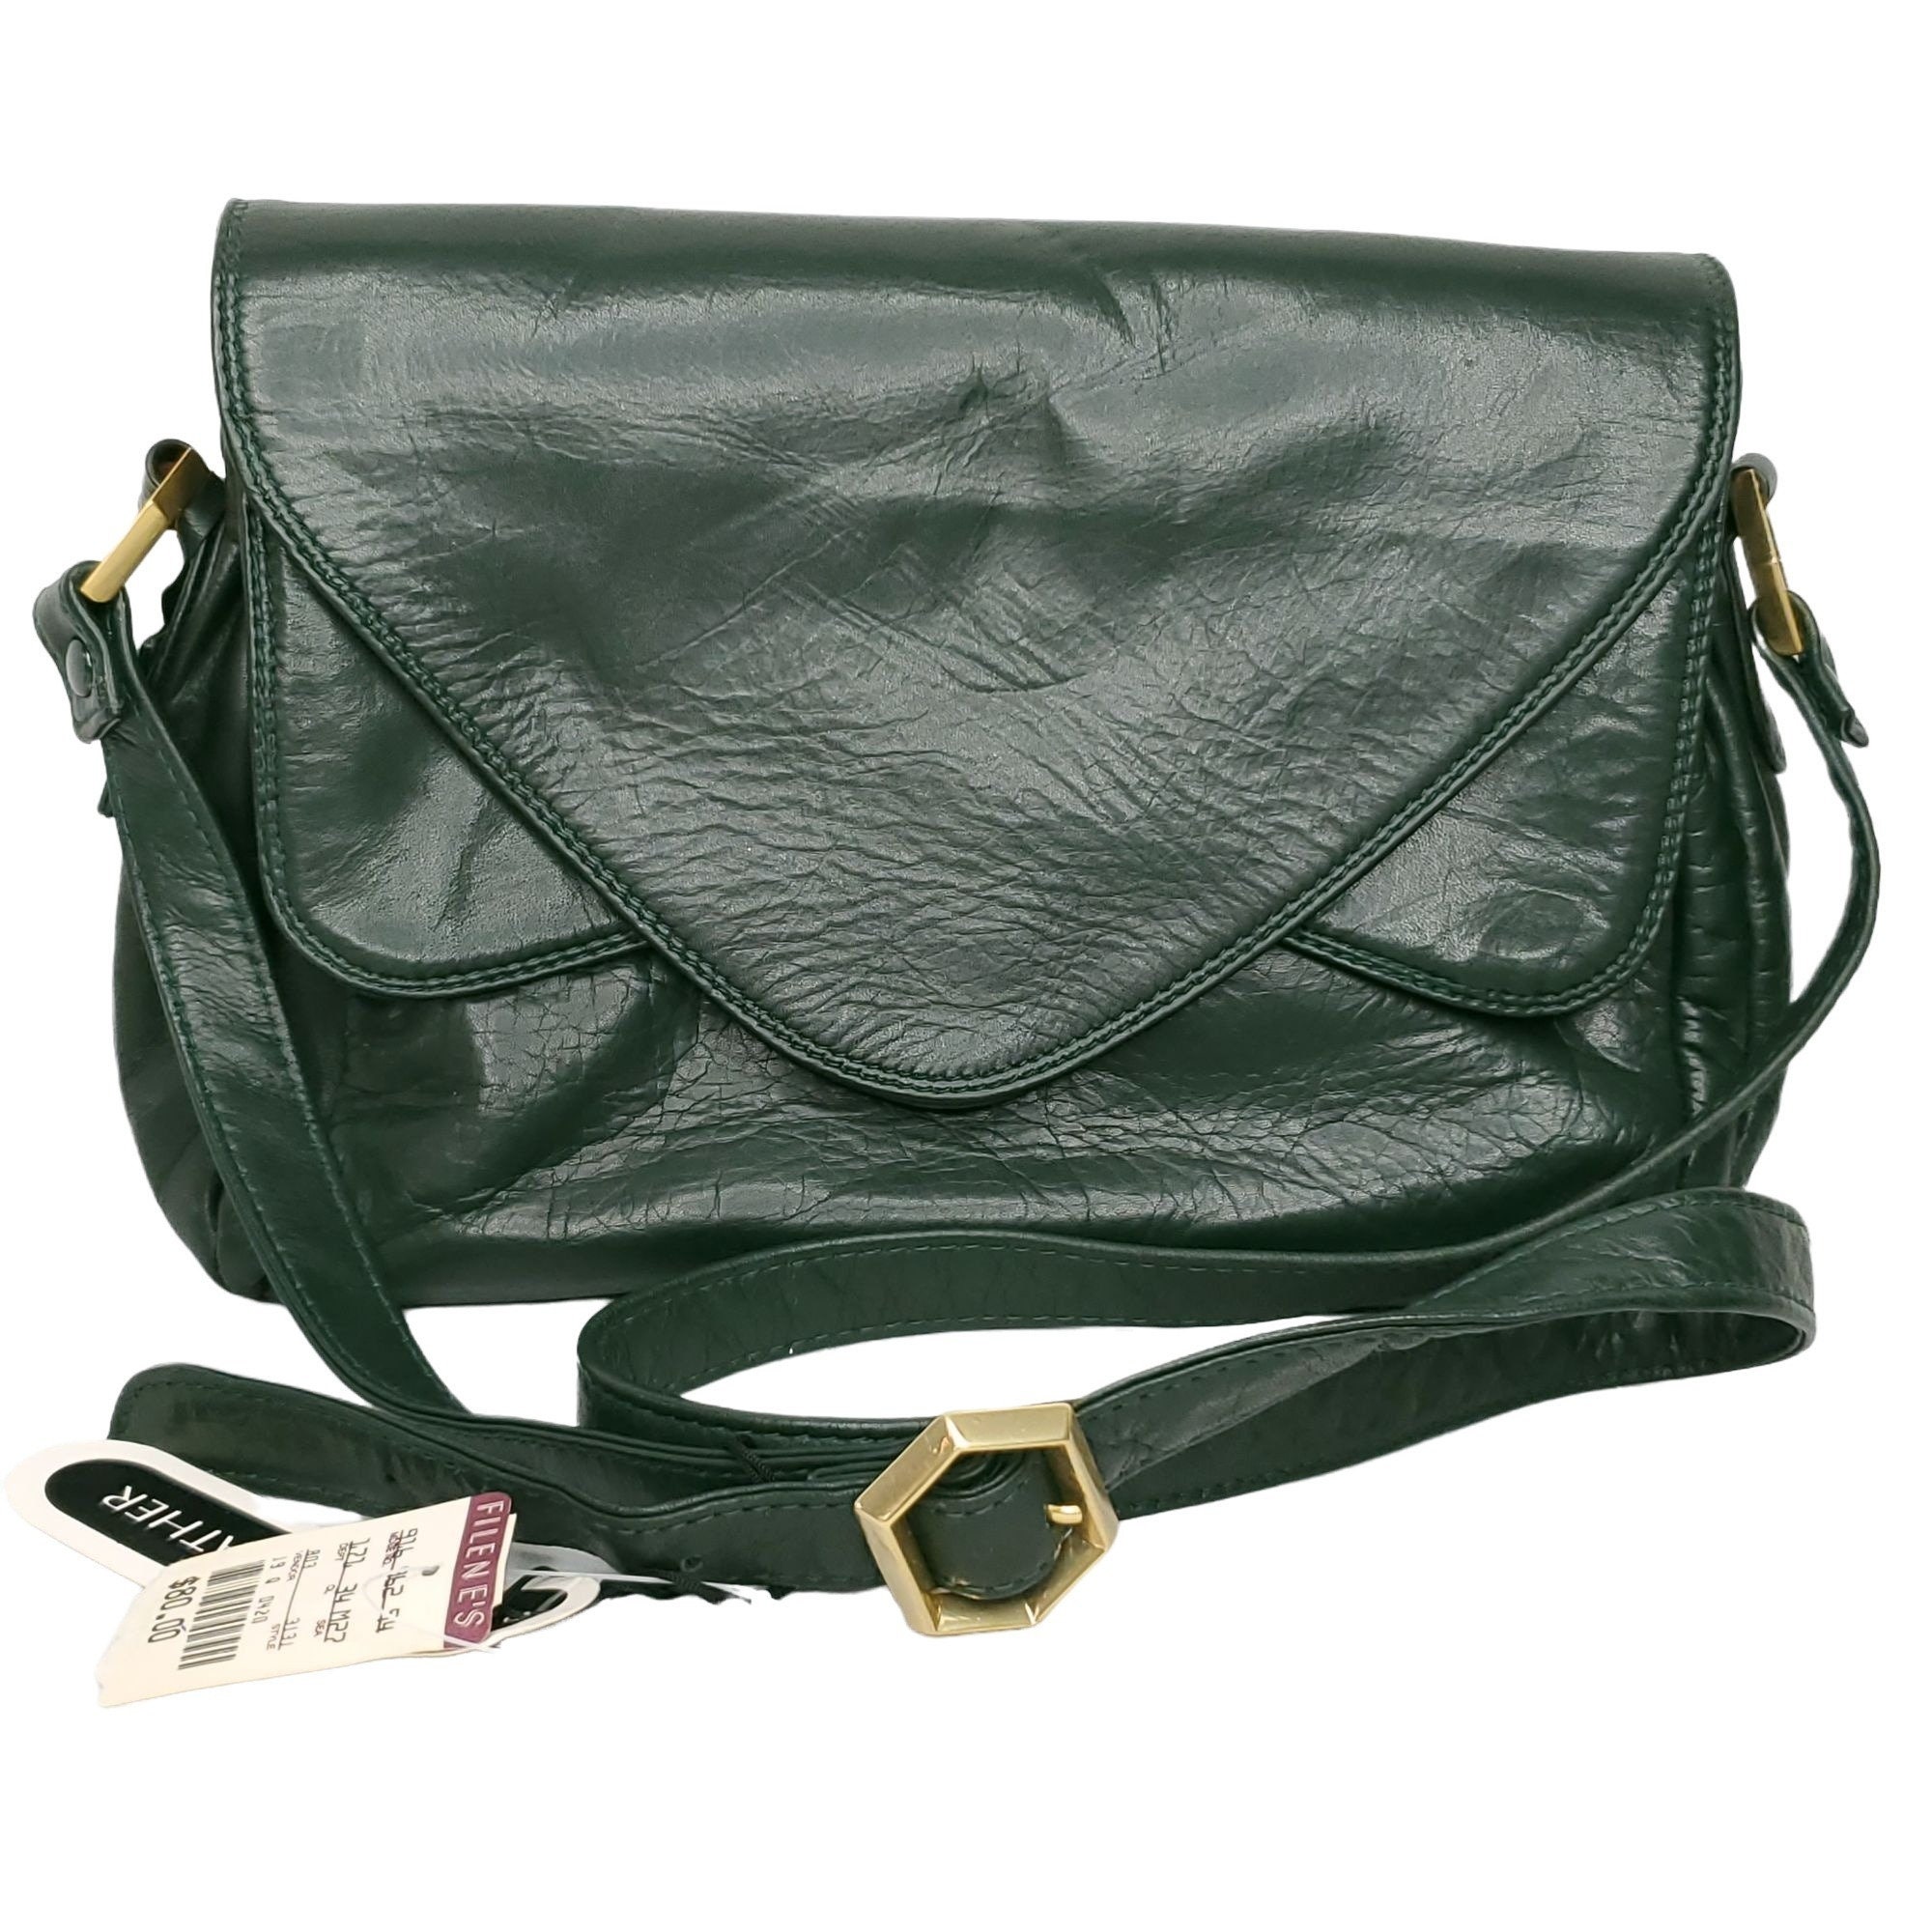 VINTAGE Giani Bernini Handbag Leather Purse Green Lots of Pockets Tote NICE